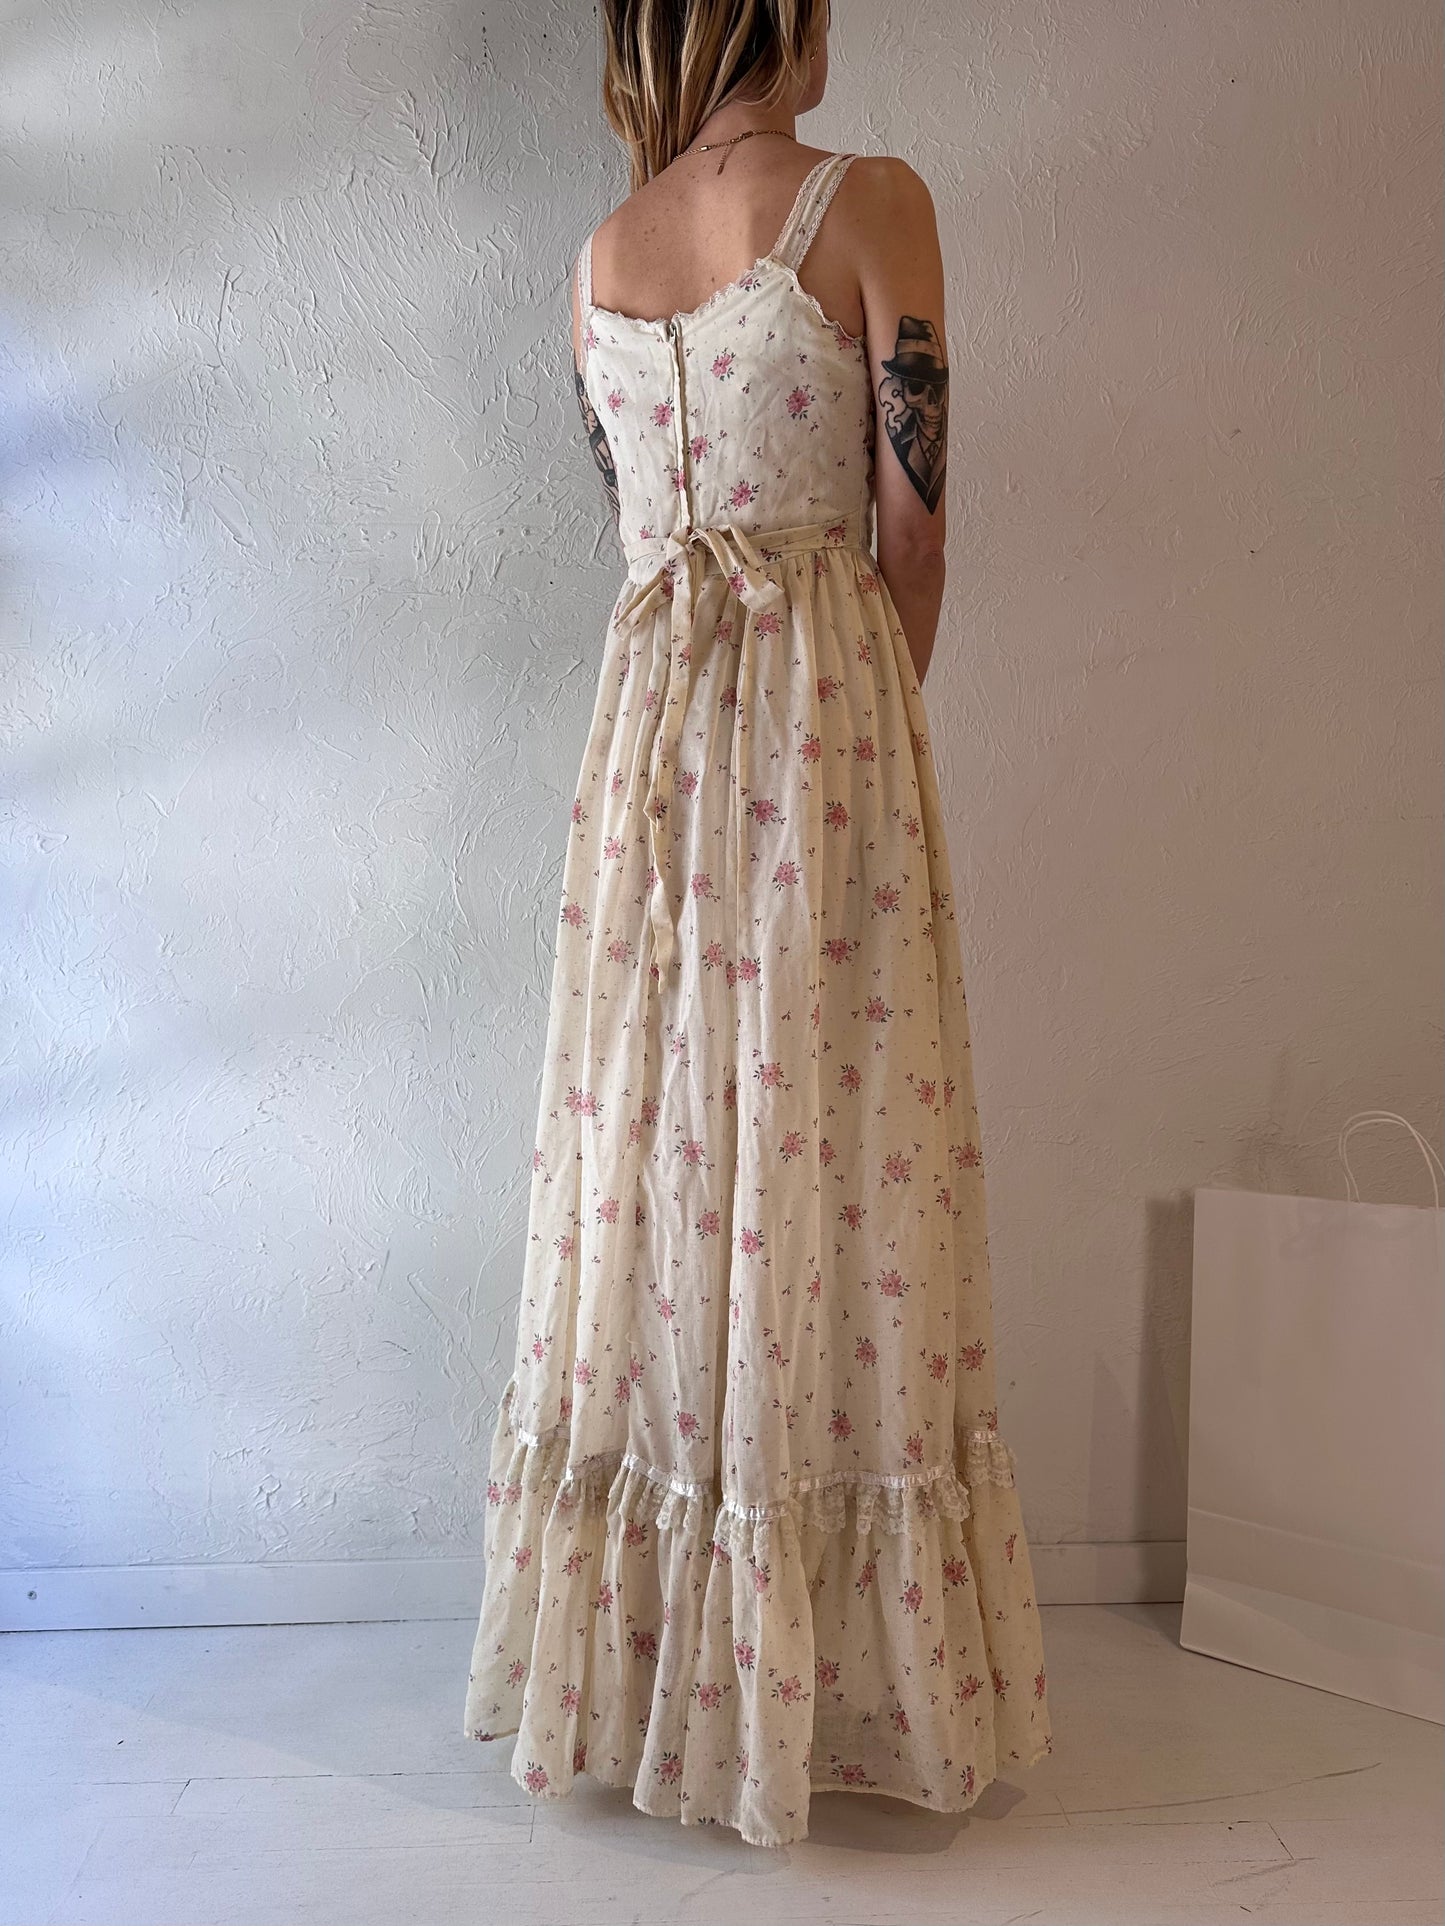 70s 'Gunne Sax' Cream Floral Print Sleeveless Dress / Small